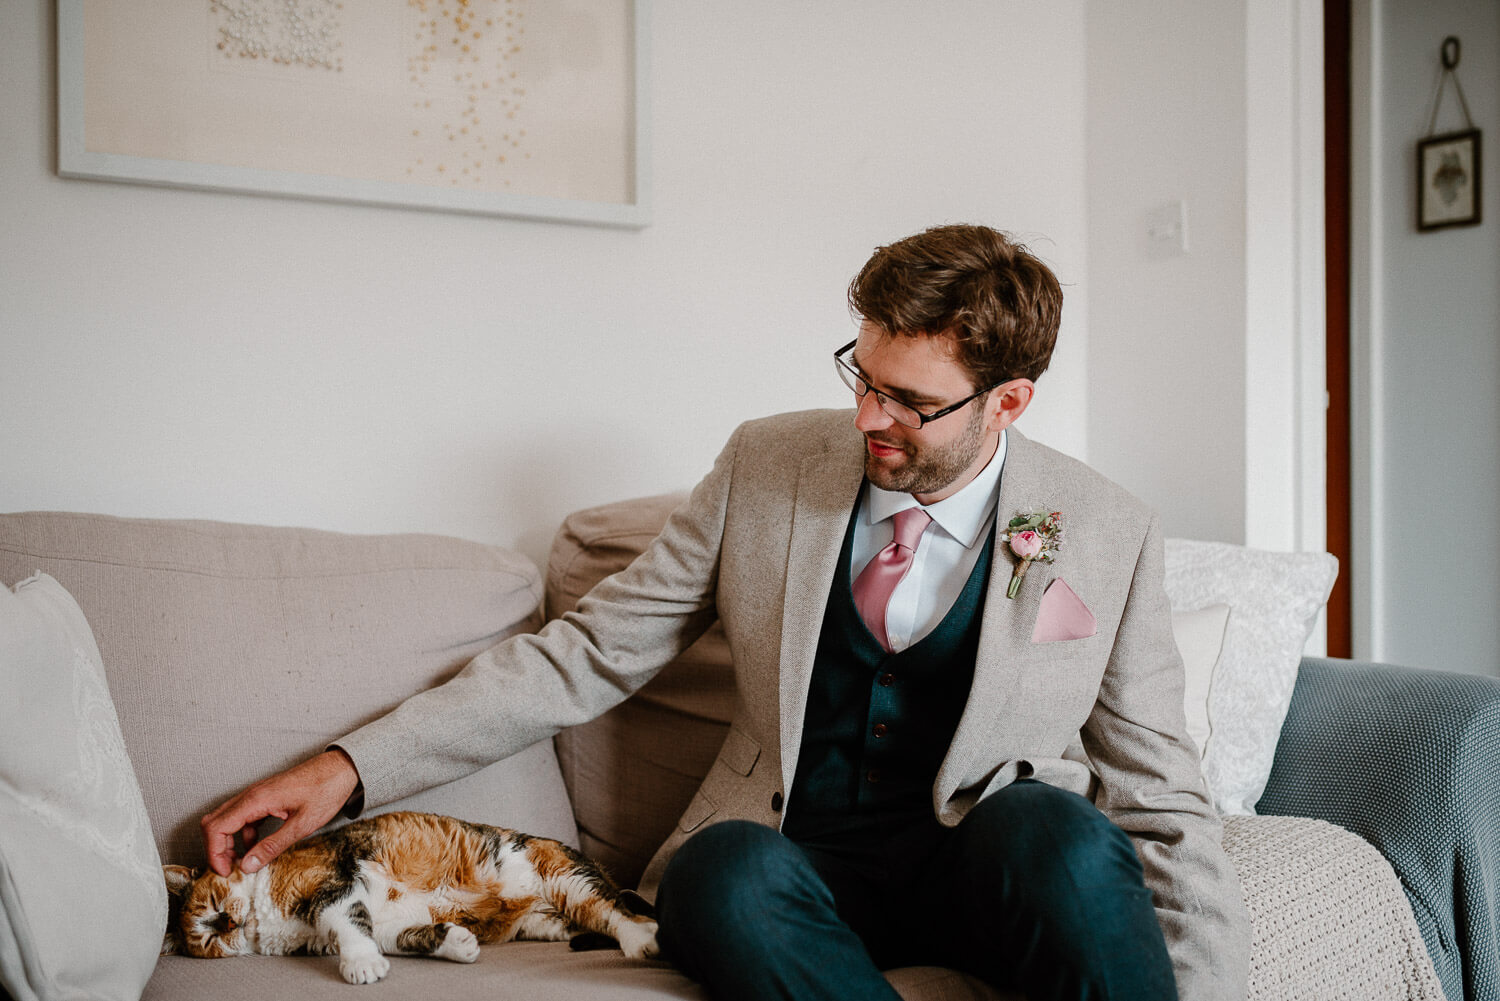 Groom strokes his cat on the sofa ahead of wedding ceremony.